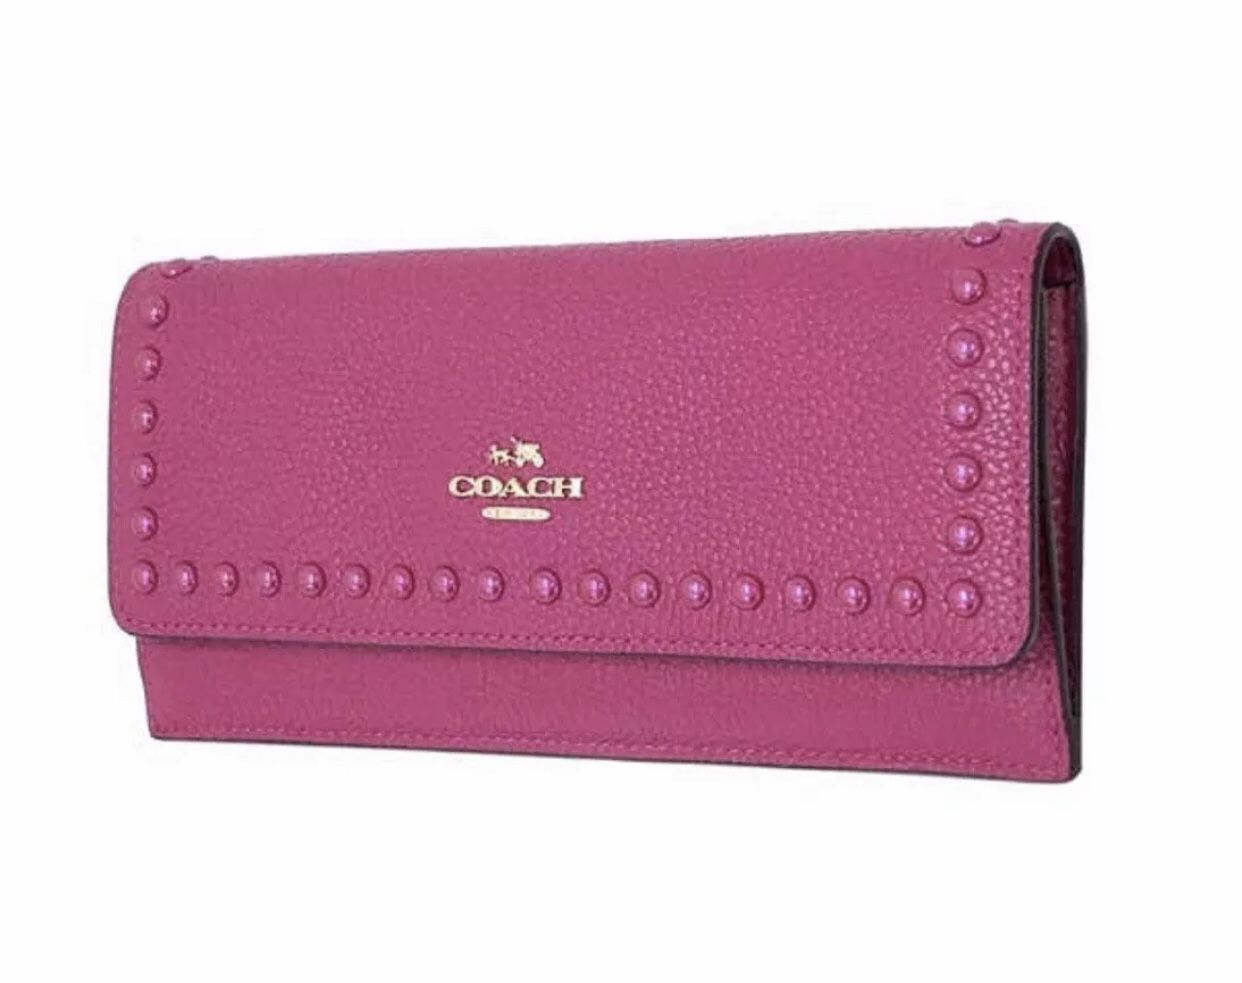 New Coach 53449 Lacquer Rivet Pebble Leather Cerise Pink Wallet